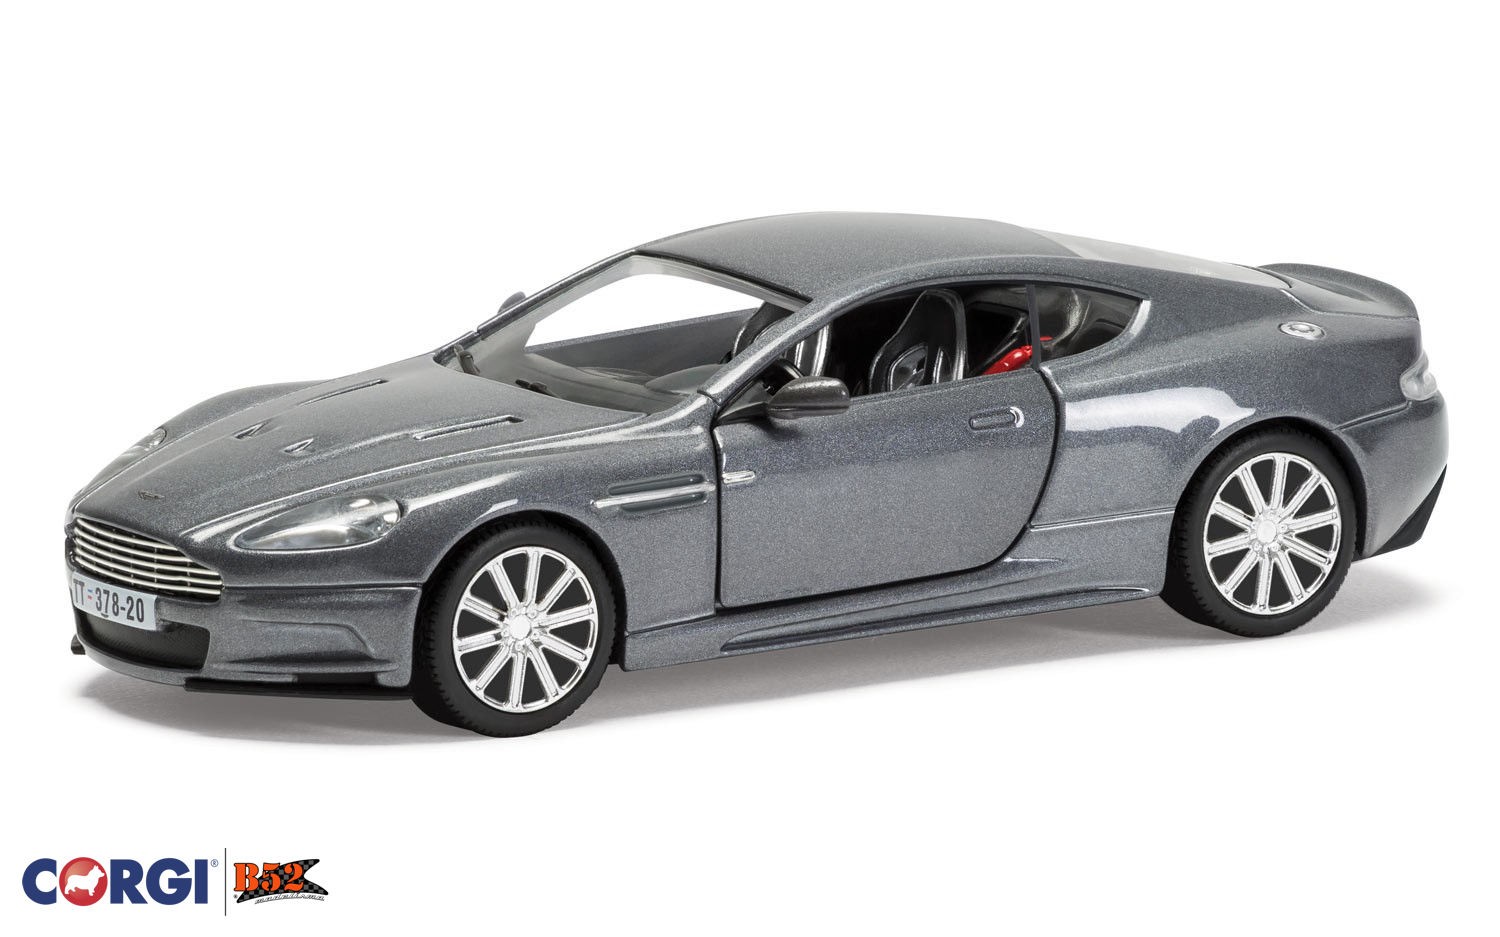 Corgi - James Bond Aston Martin DBS "Casino Royale": CC03803